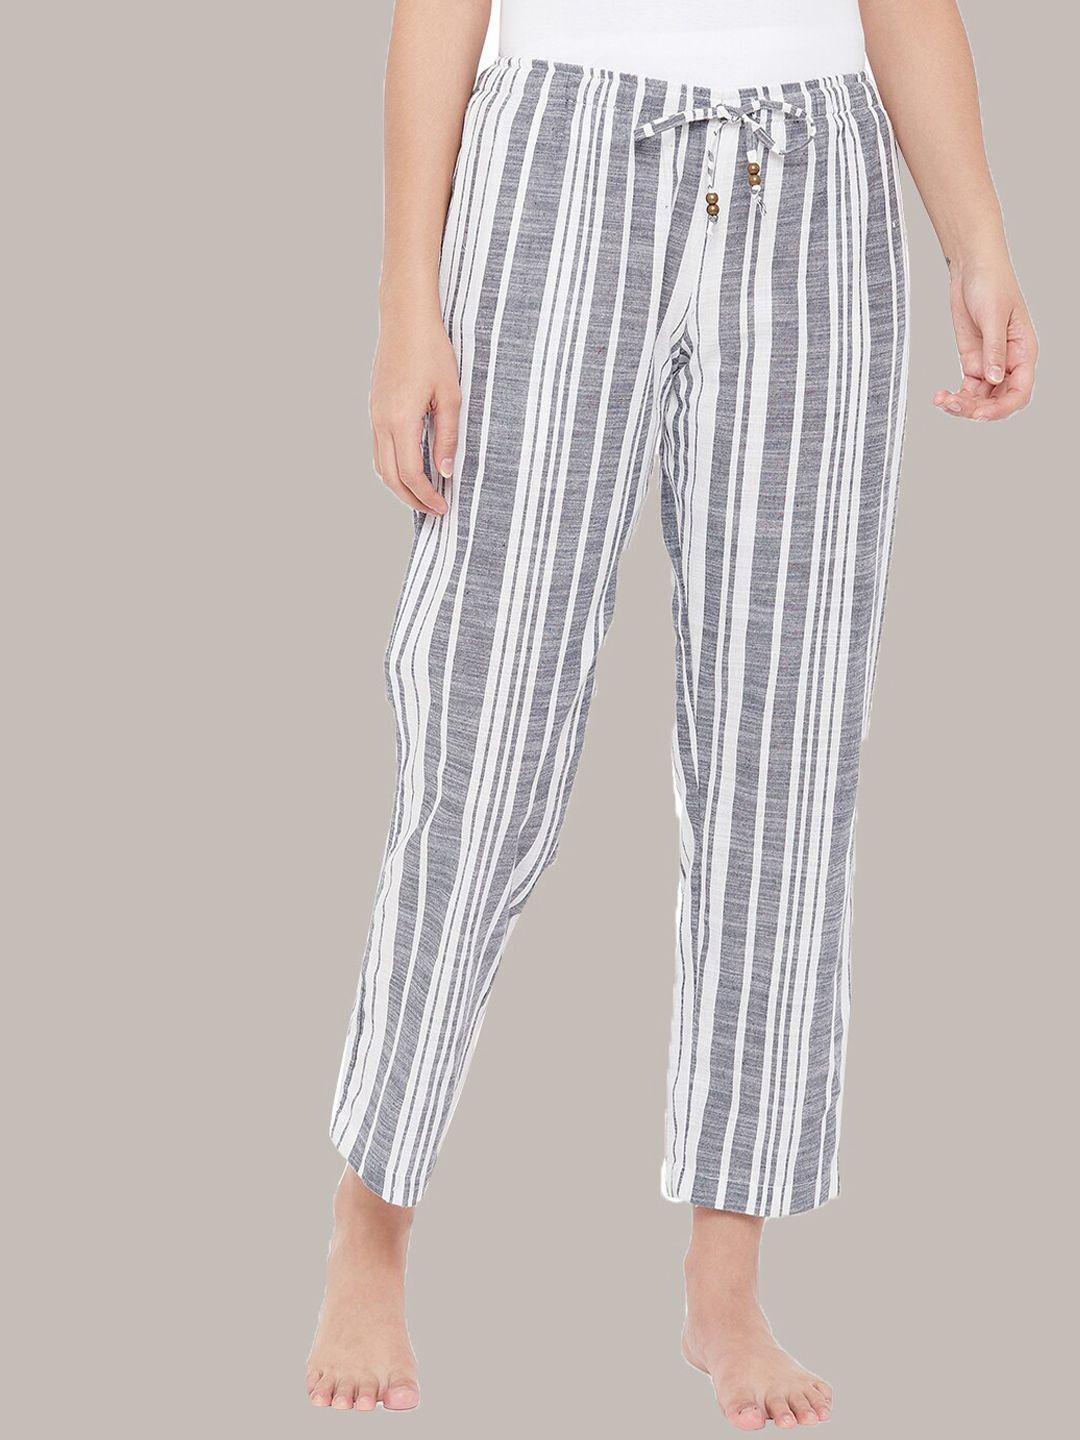 style shoes women's grey & white striped cotton lounge pants